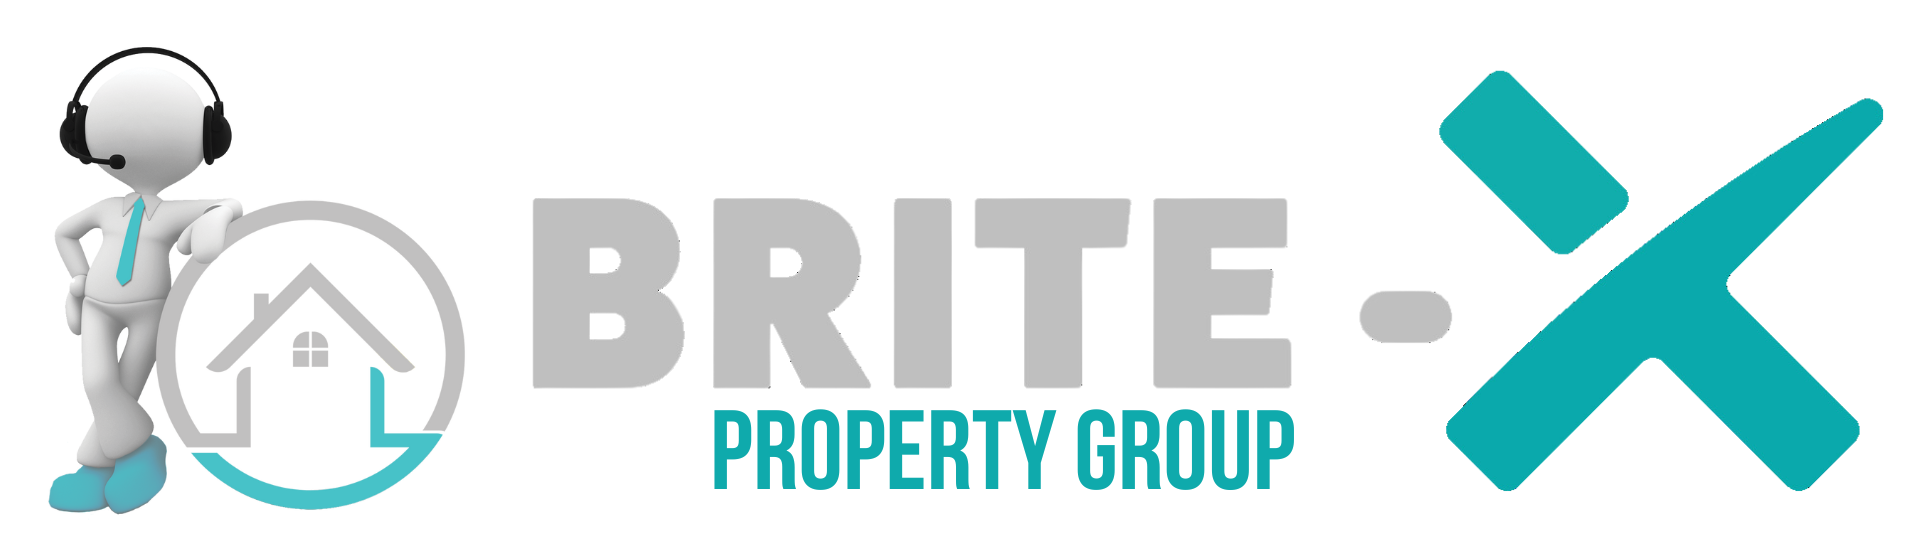 PG Black BG 1 1 - Real Estate Agent Gauteng - BRITE-X Property Group